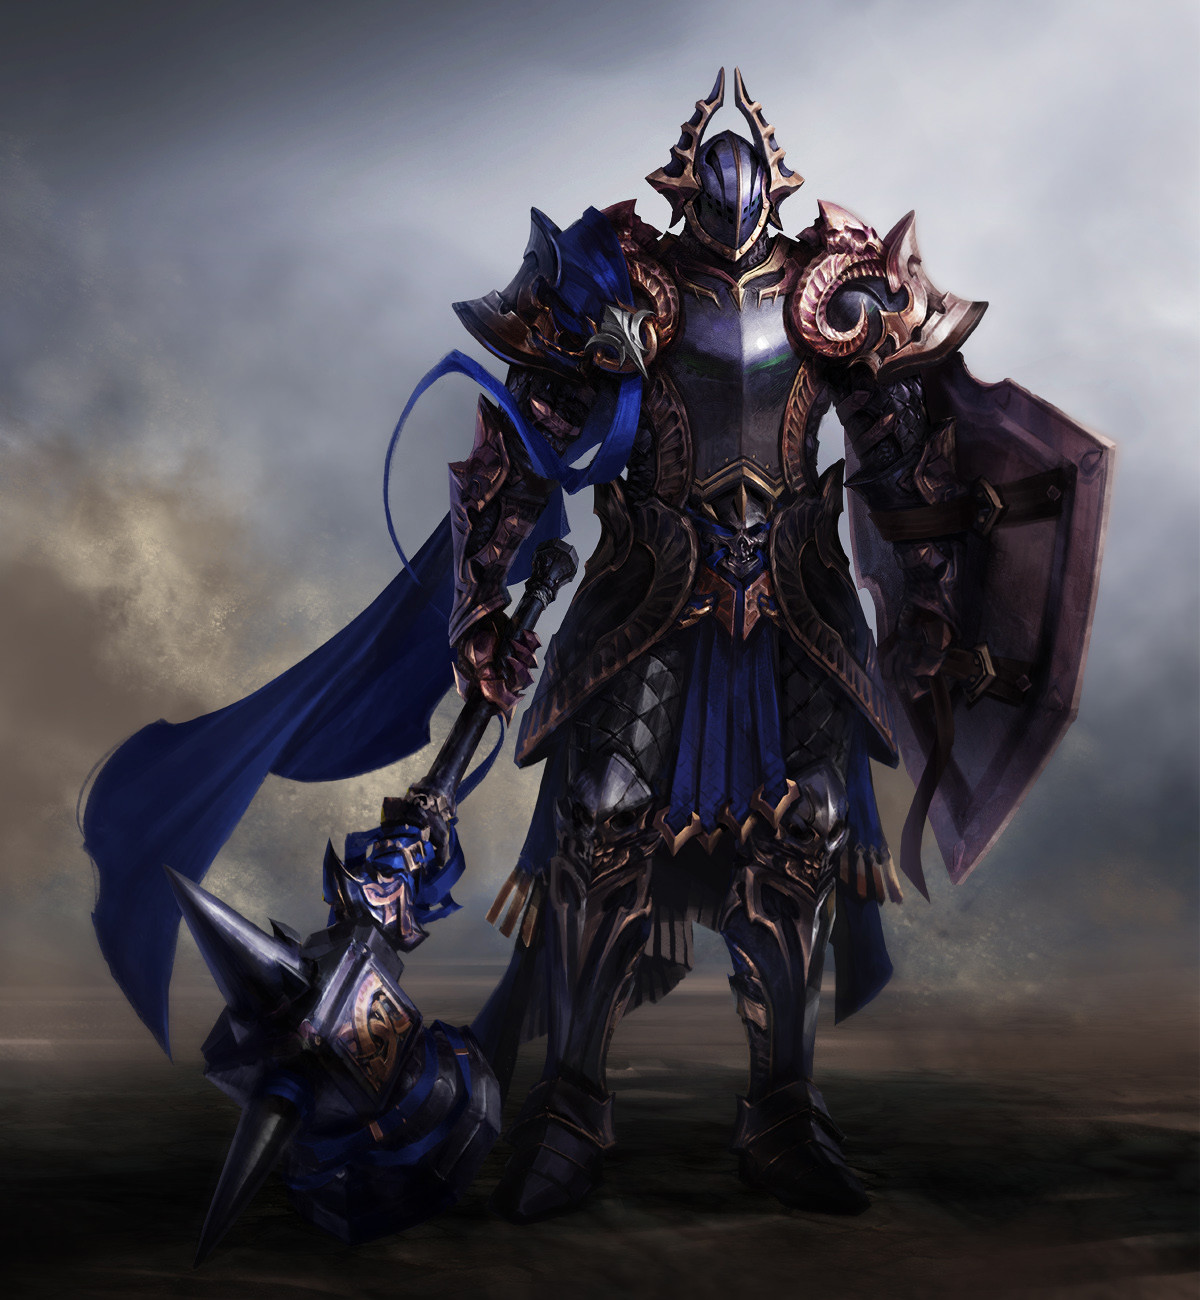 General 1200x1300 drawing men dark helmet horns armor cape steel weapon mace spikes shield mist warrior Ares (artist) digital art